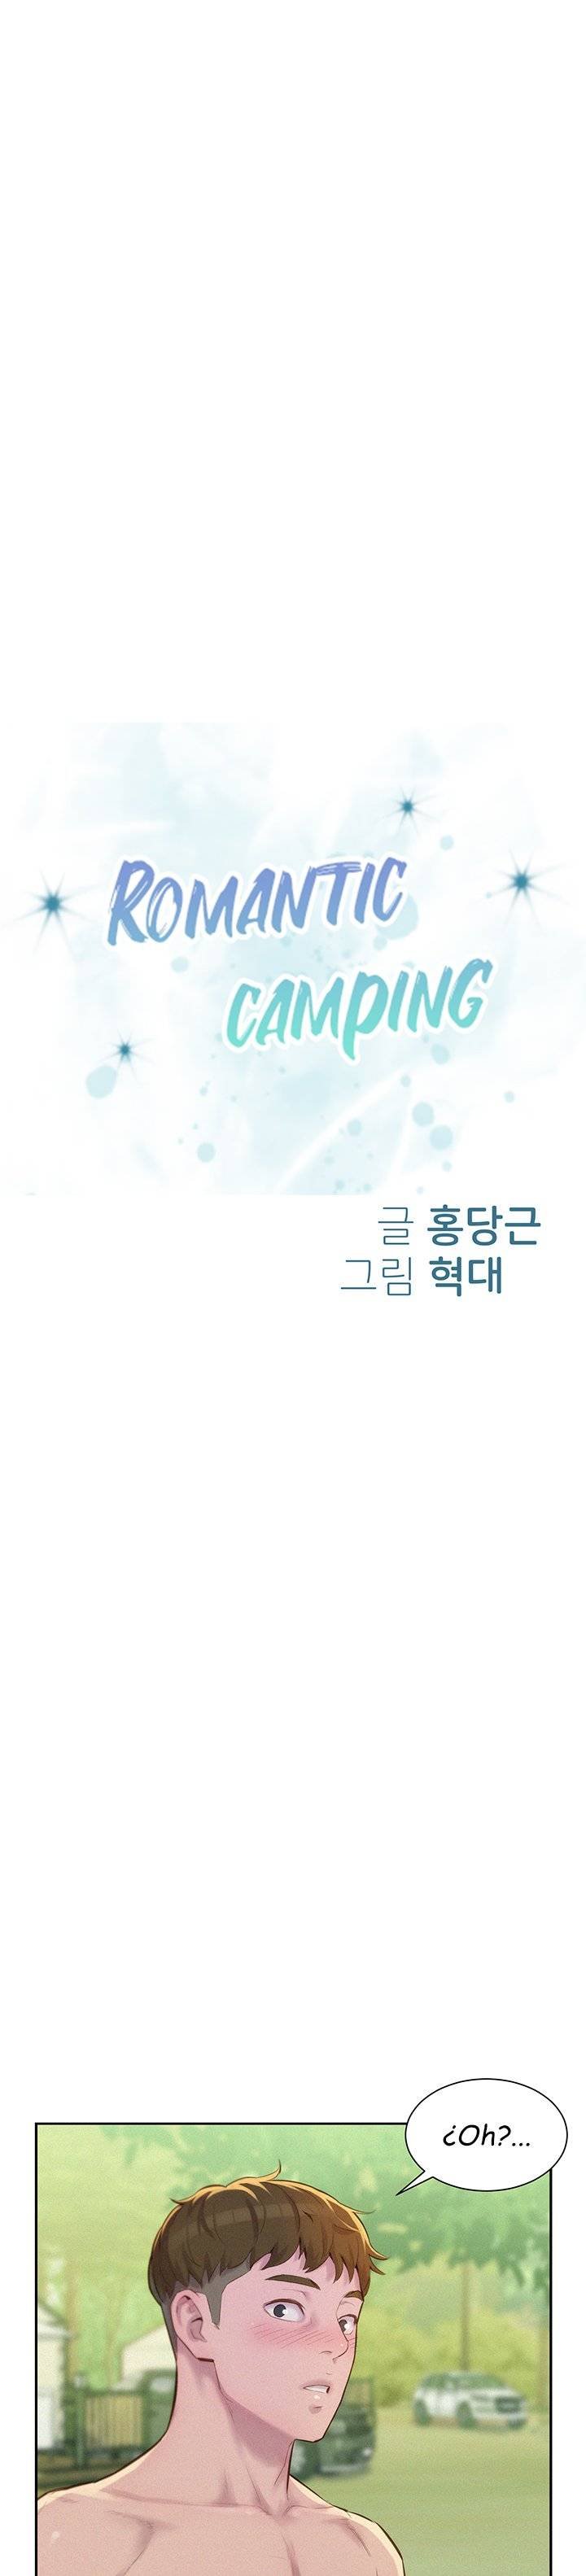 camping-raw-chap-9-2